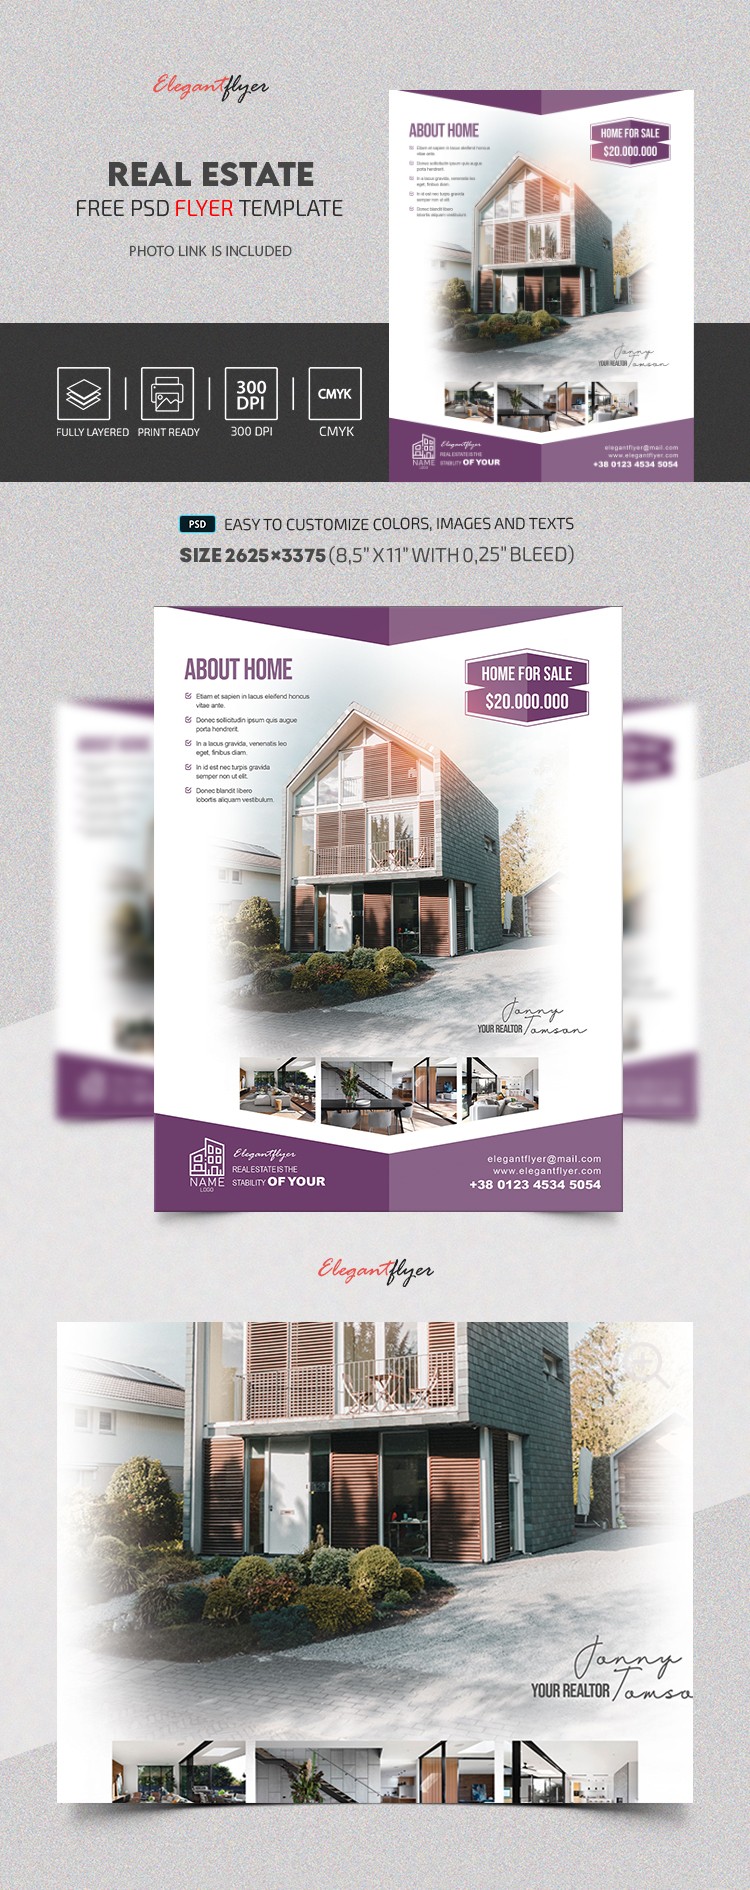 Real Estate - Free Flyer PSD Template by ElegantFlyer